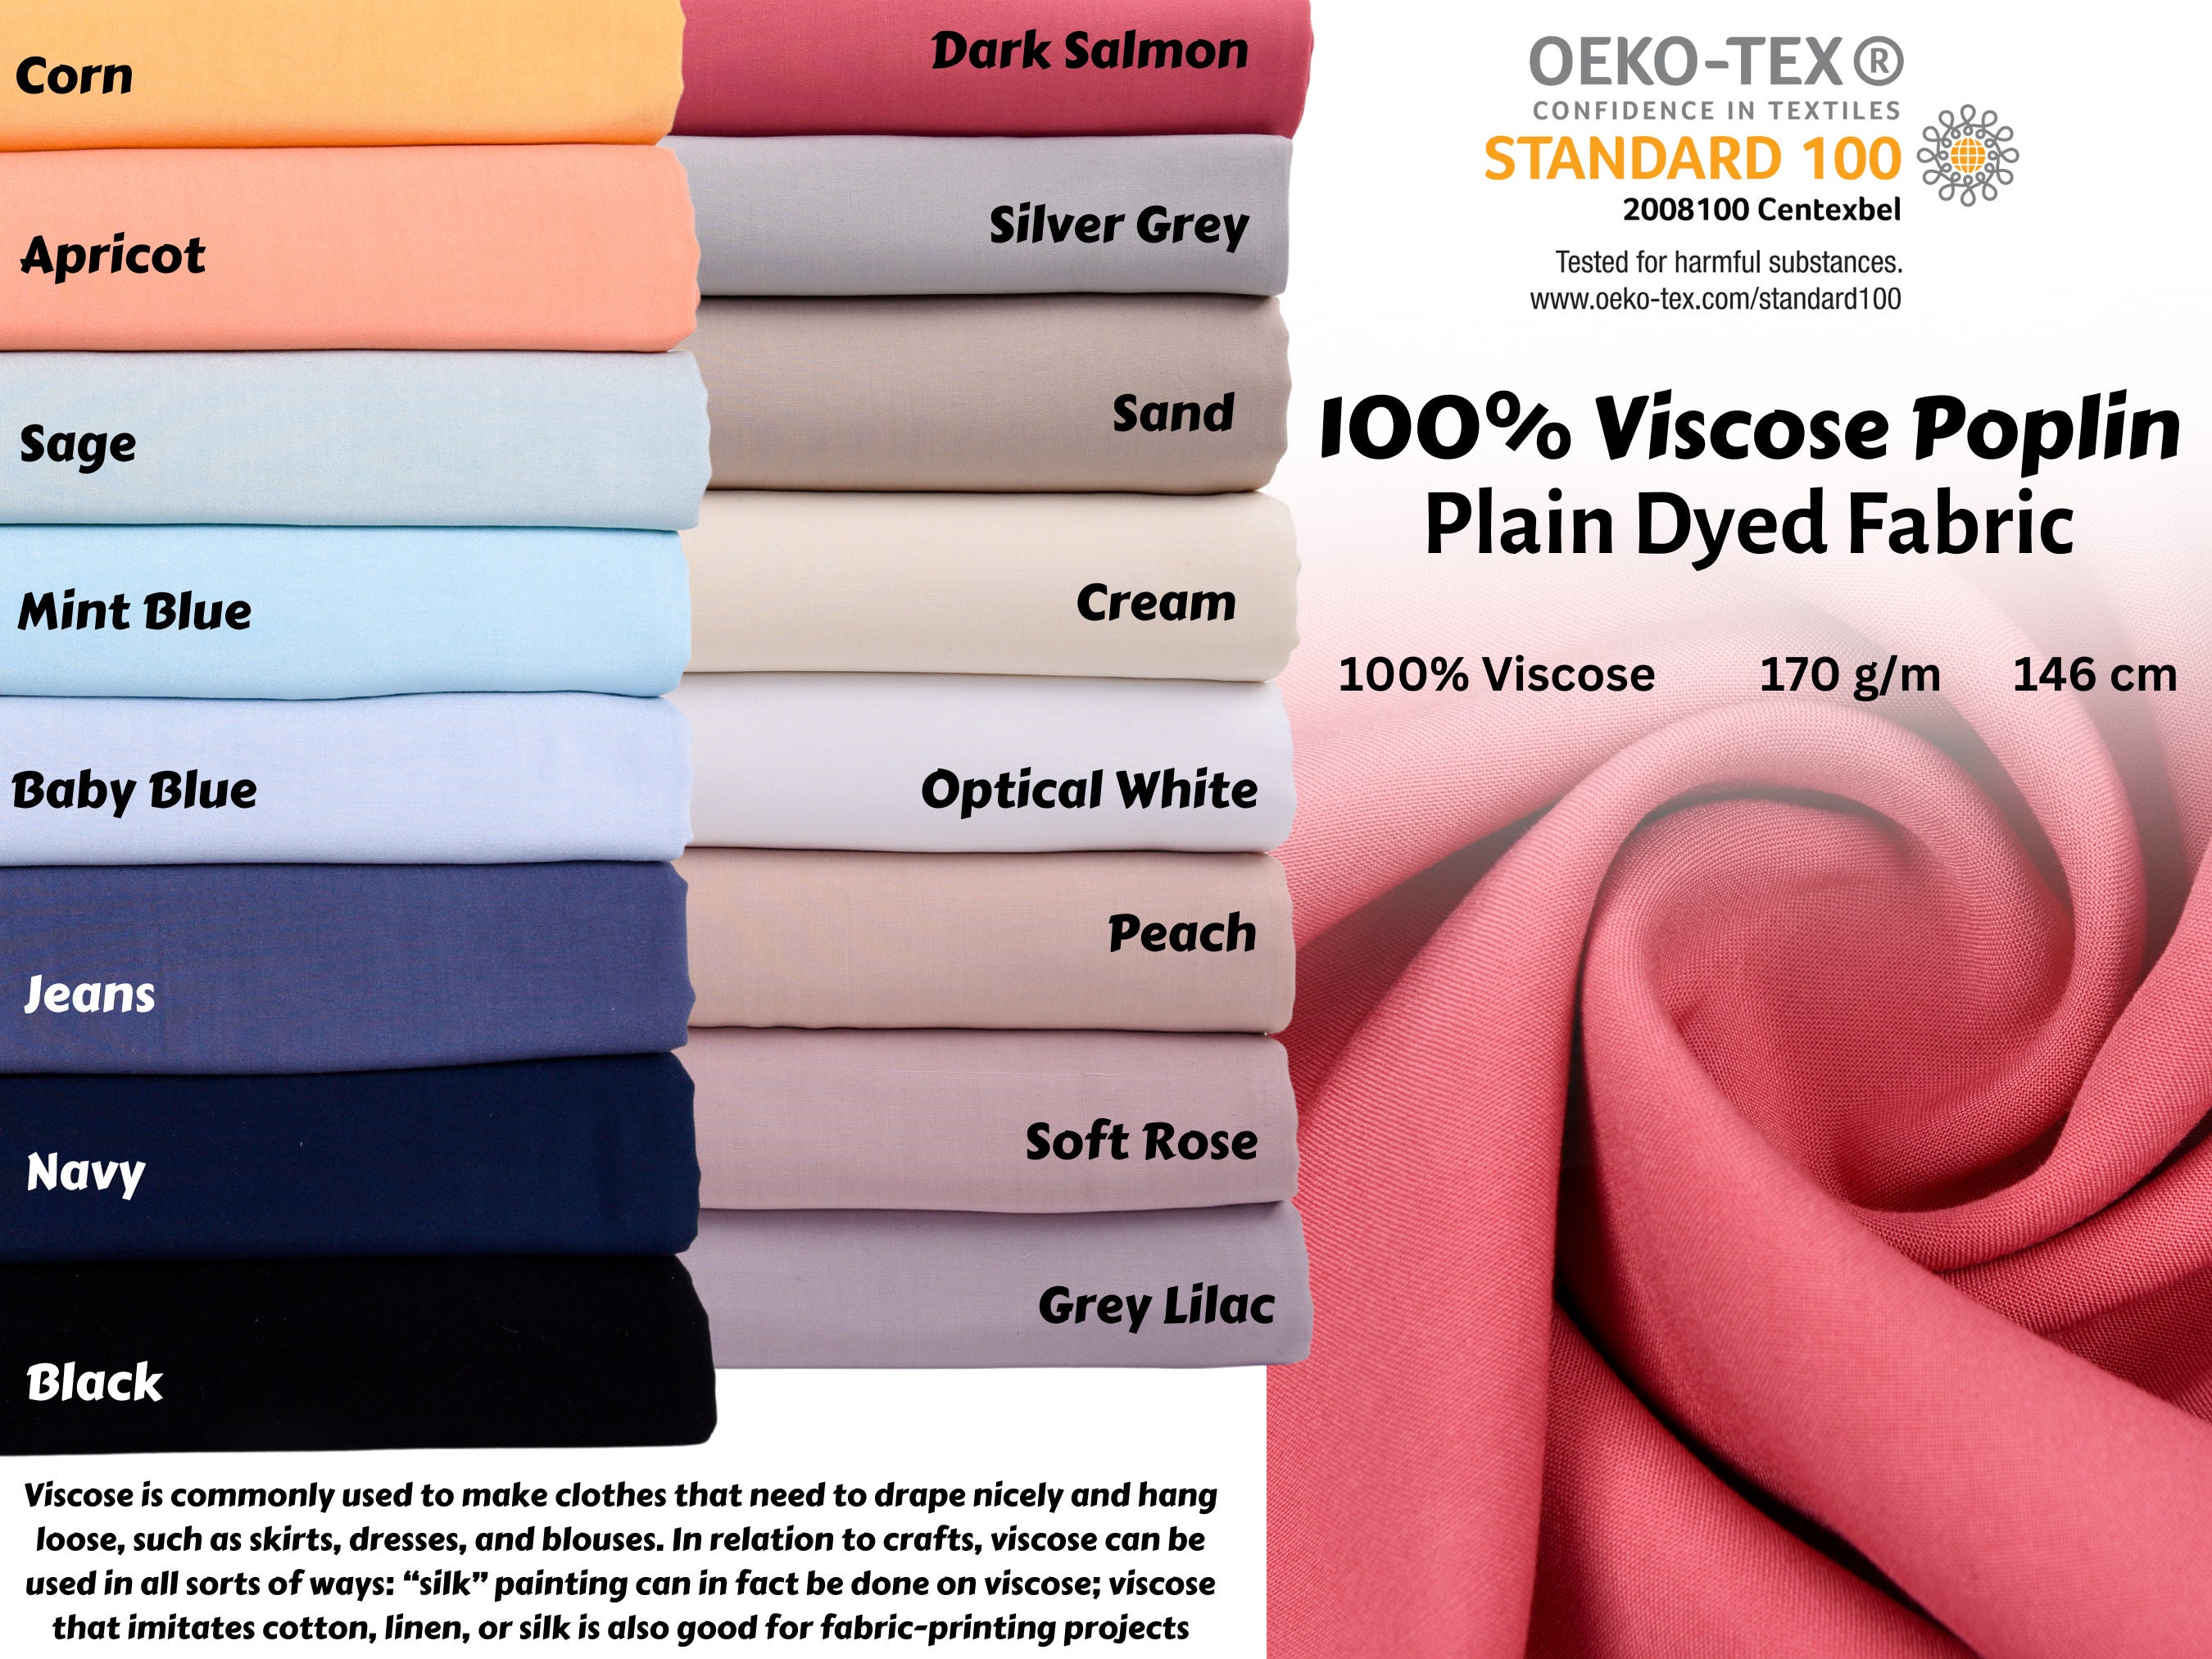 100% Rayon/viscose Swiss Dot Crepe Fabric Sold by Half Metre Green -   Canada